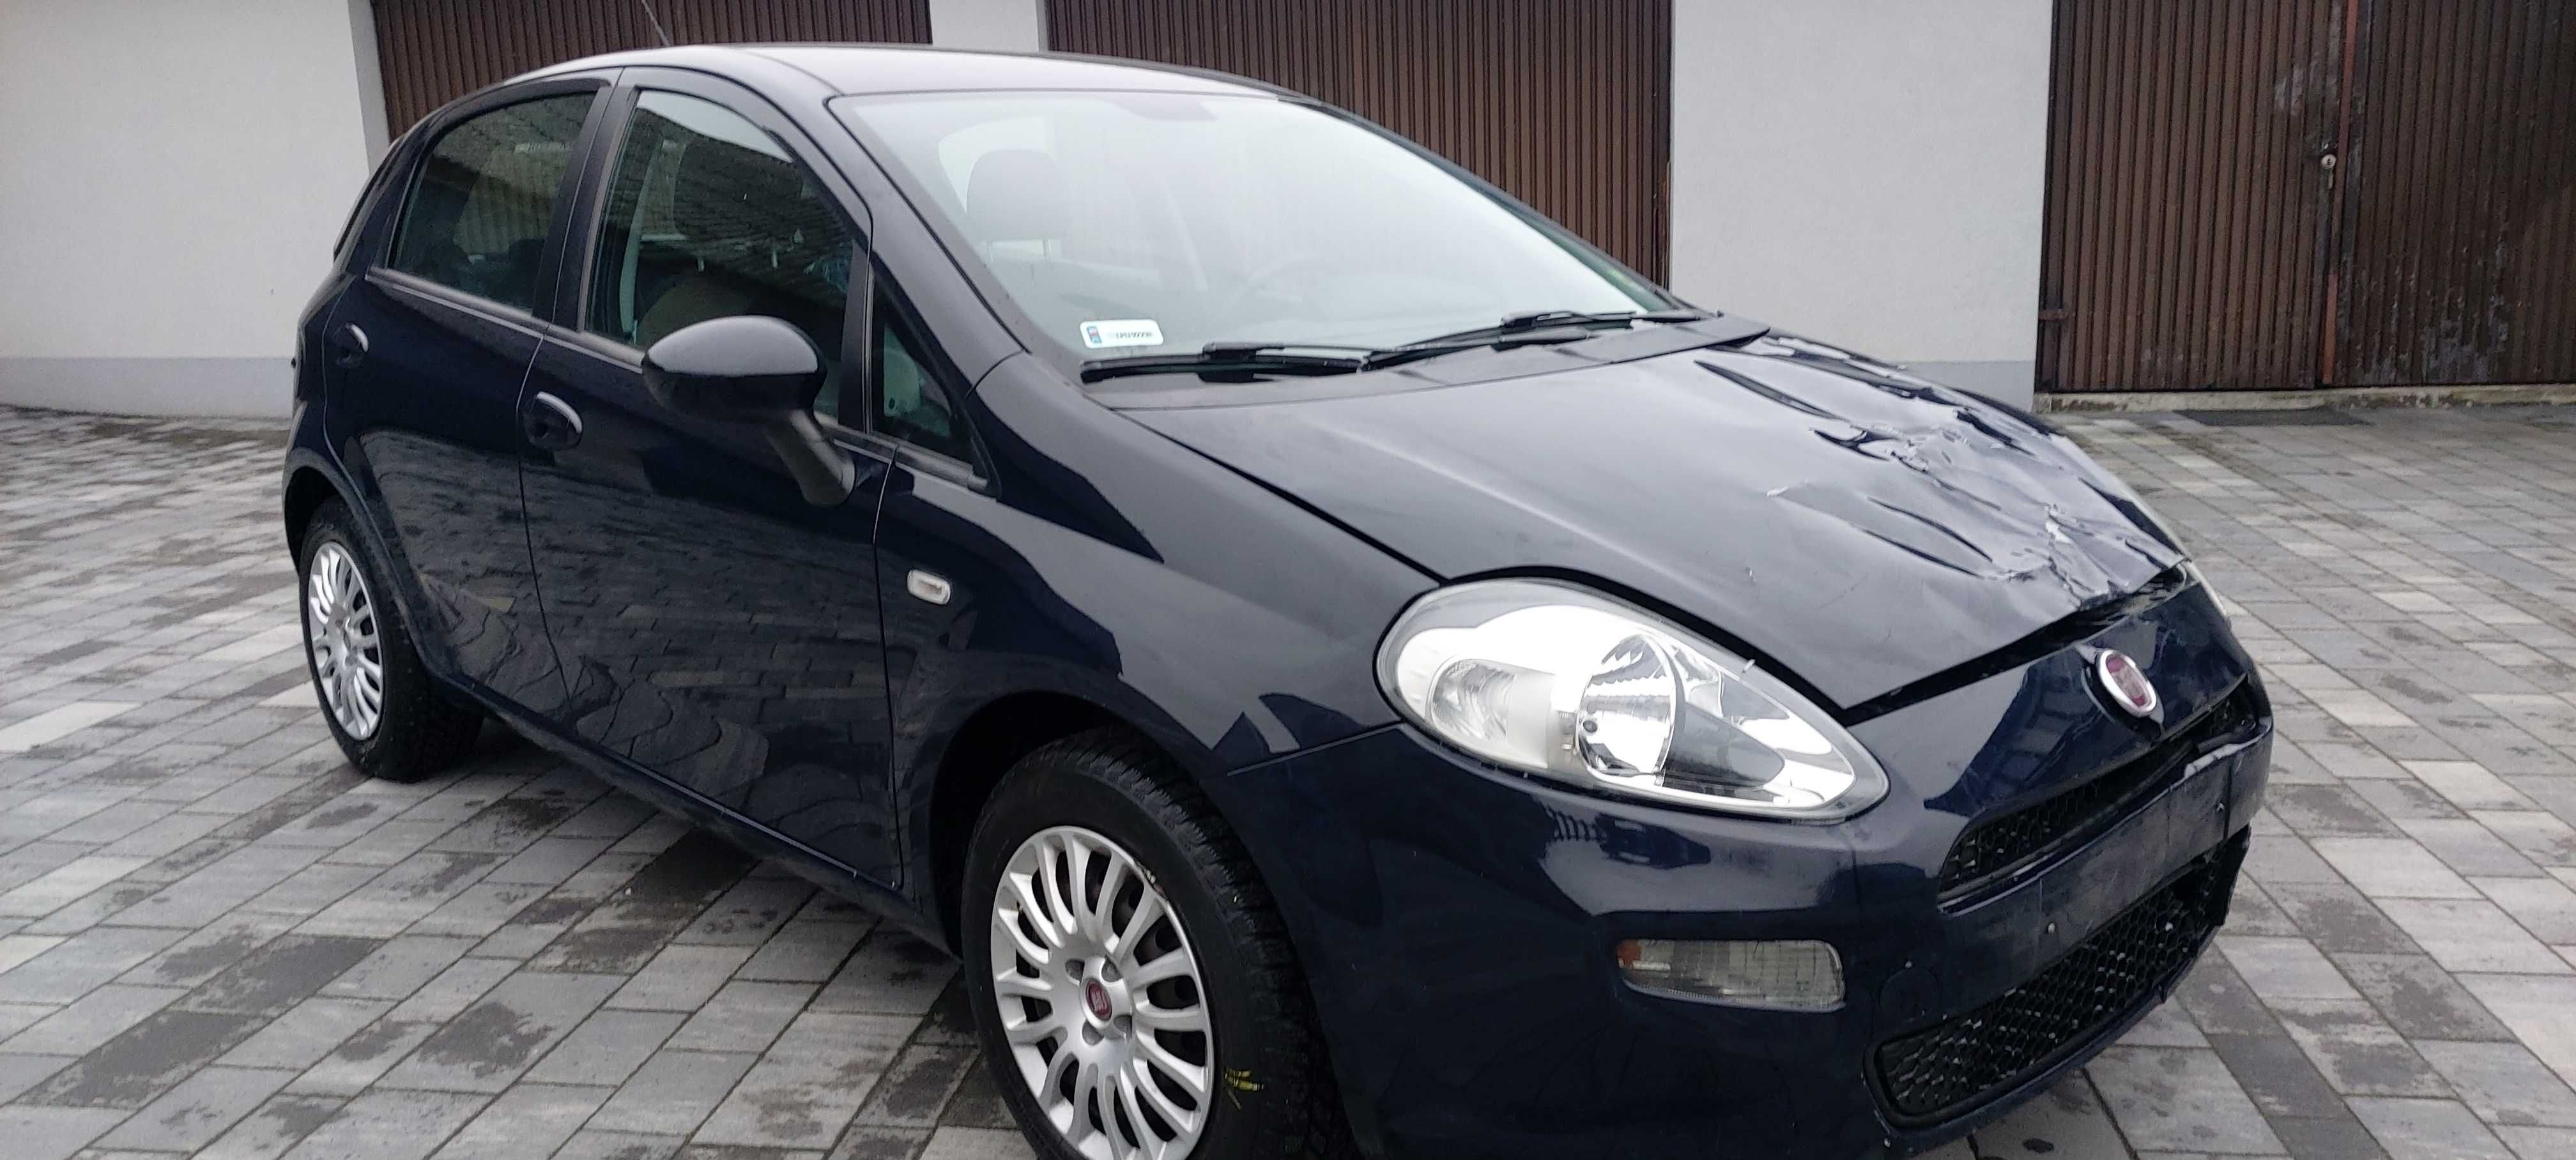 Fiat Punto 1.4 benzyna 2014r